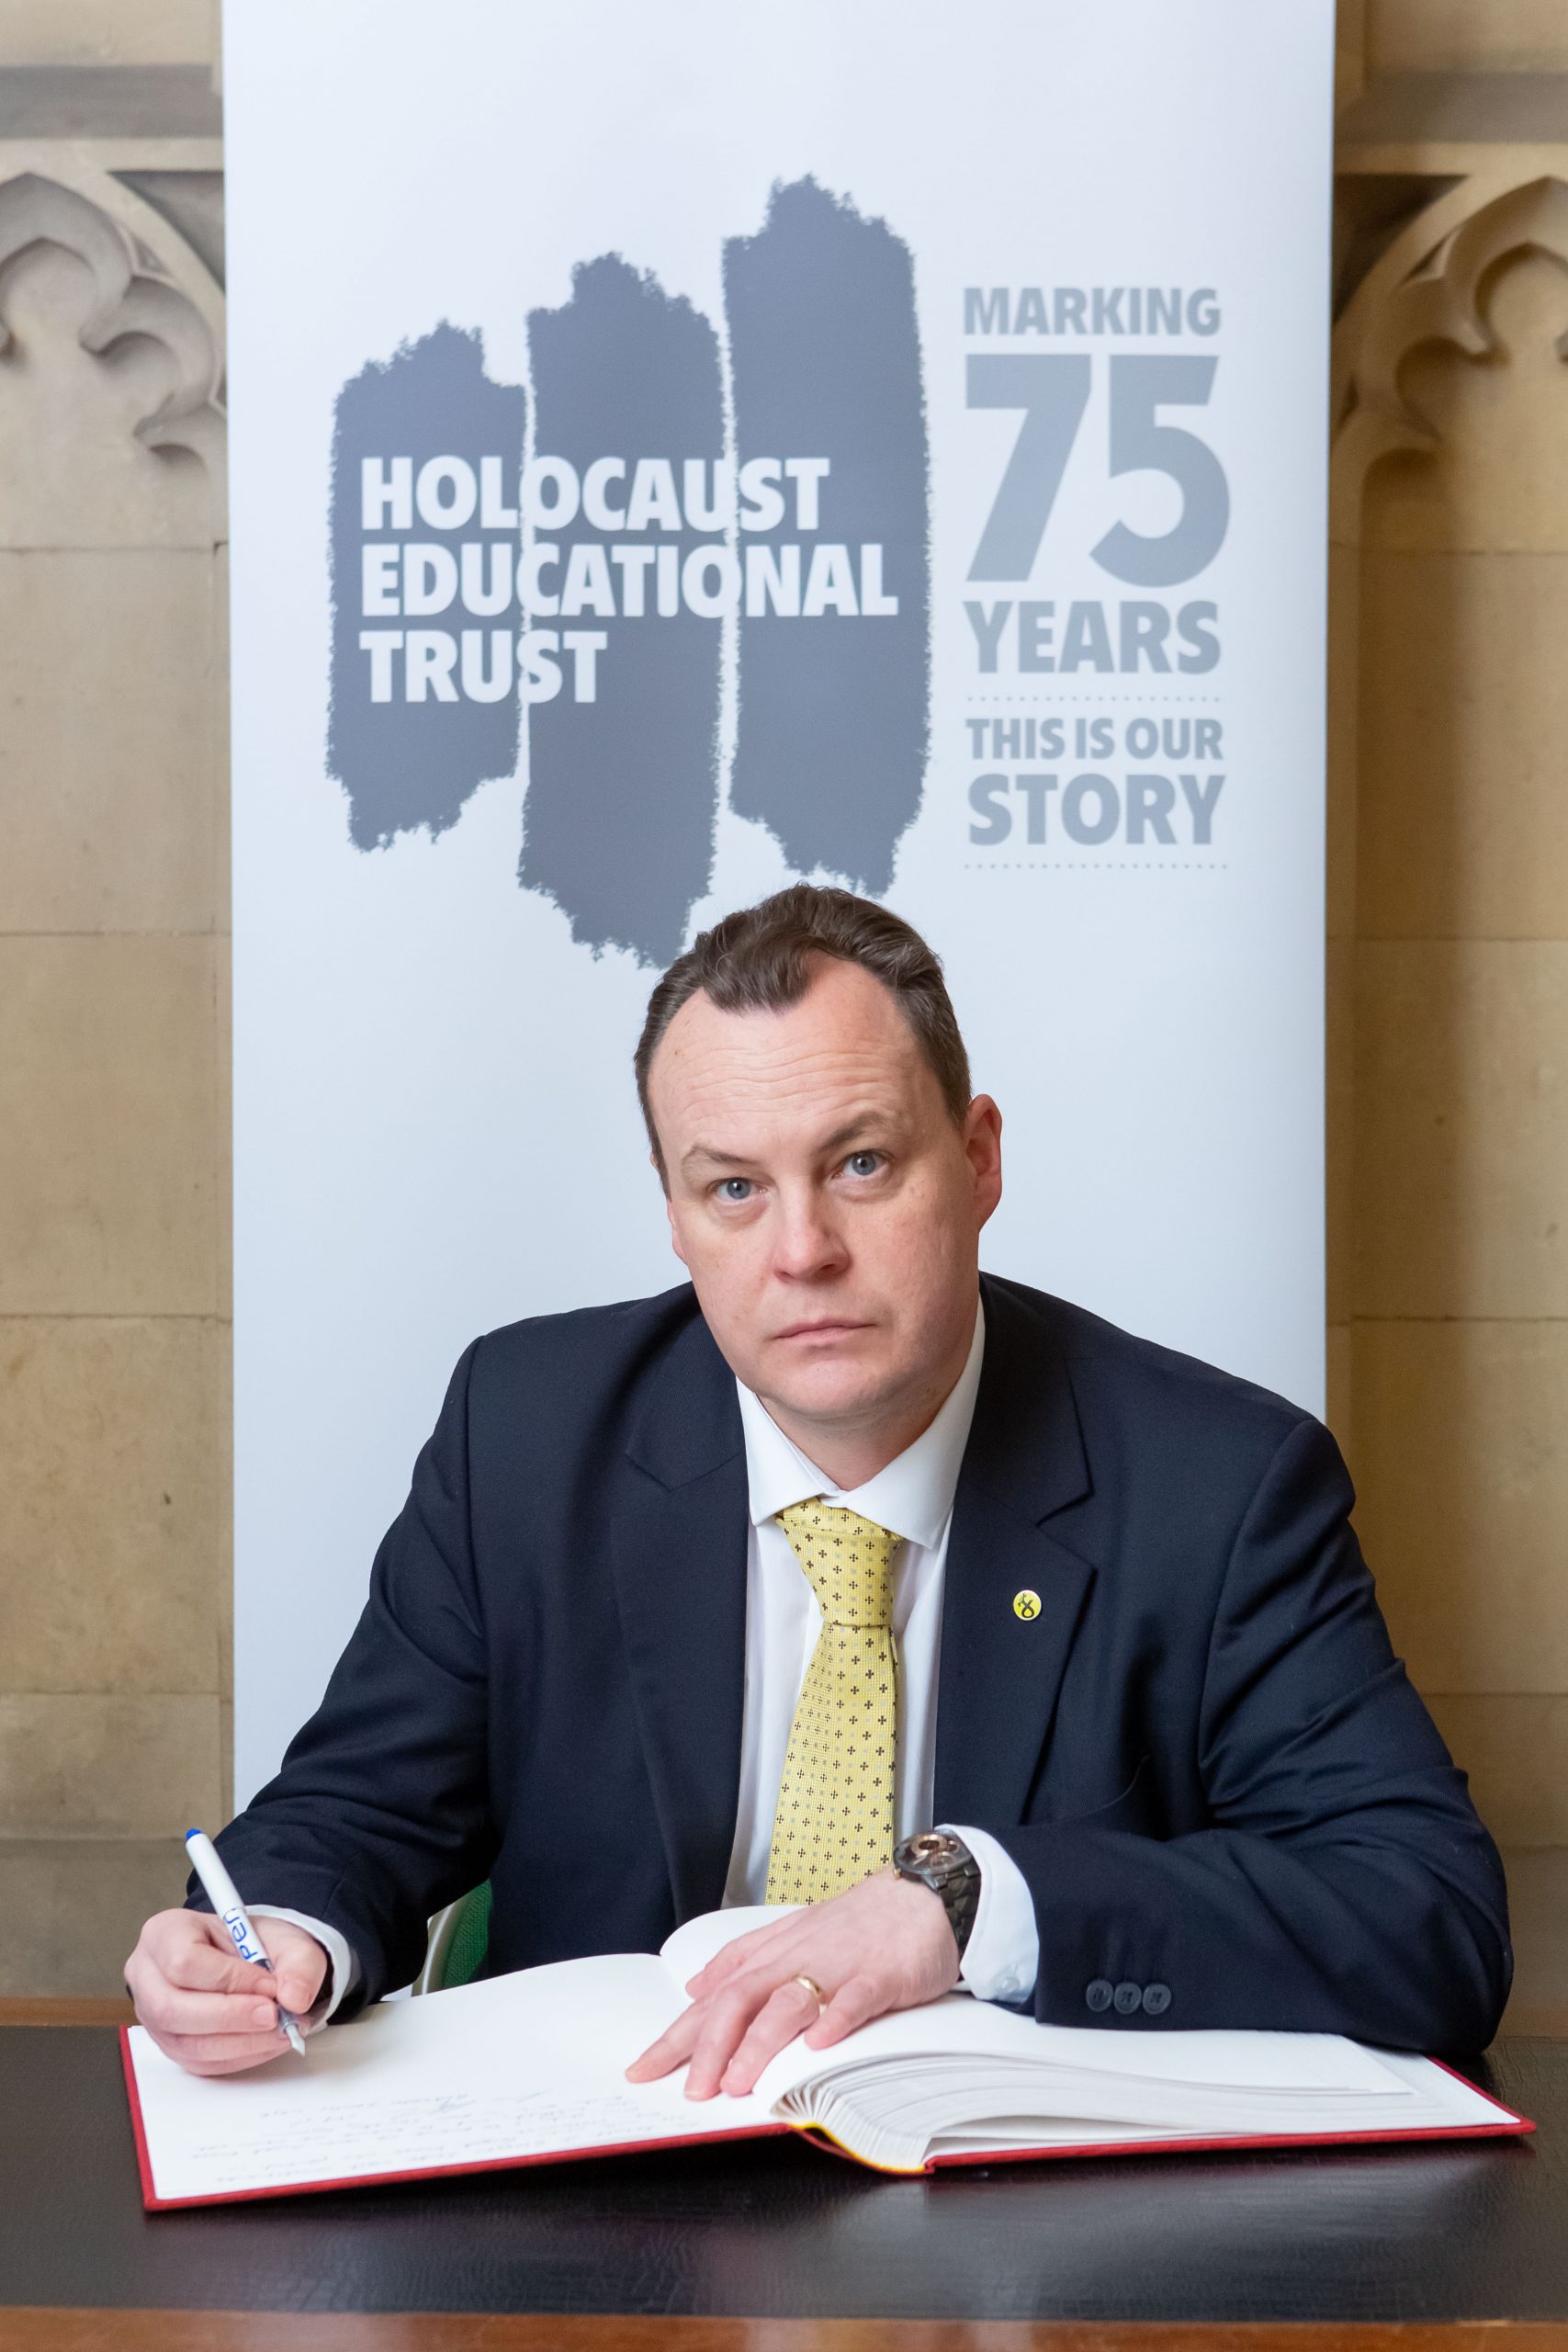 Chris Stephens MP - Holocaust educational trust